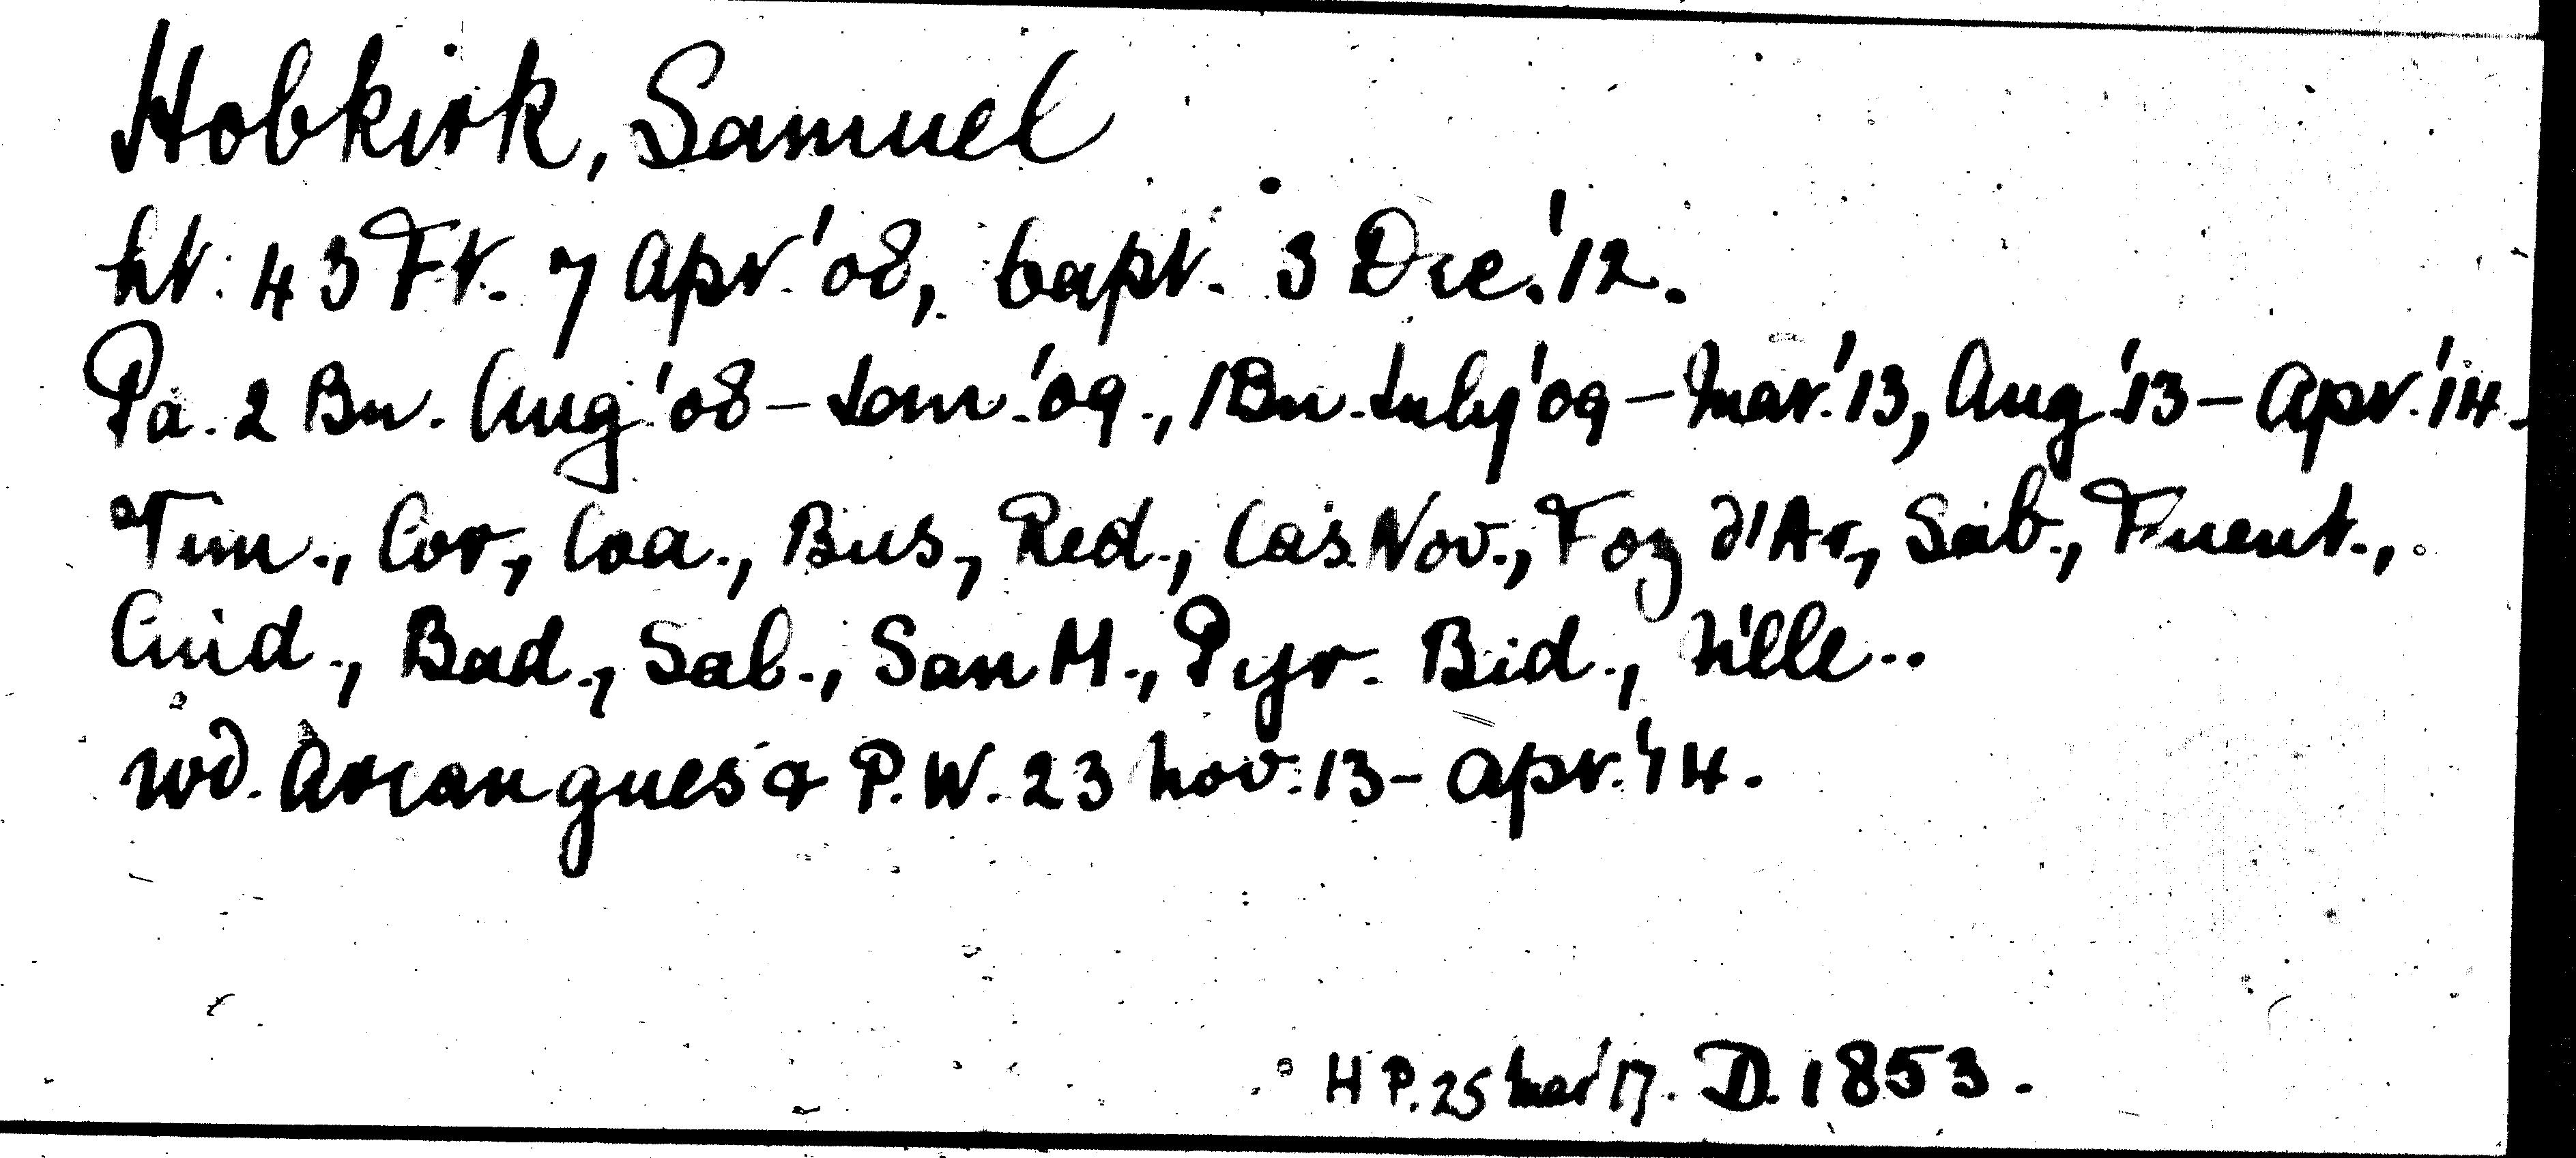 Samuel Hobkirk Military record